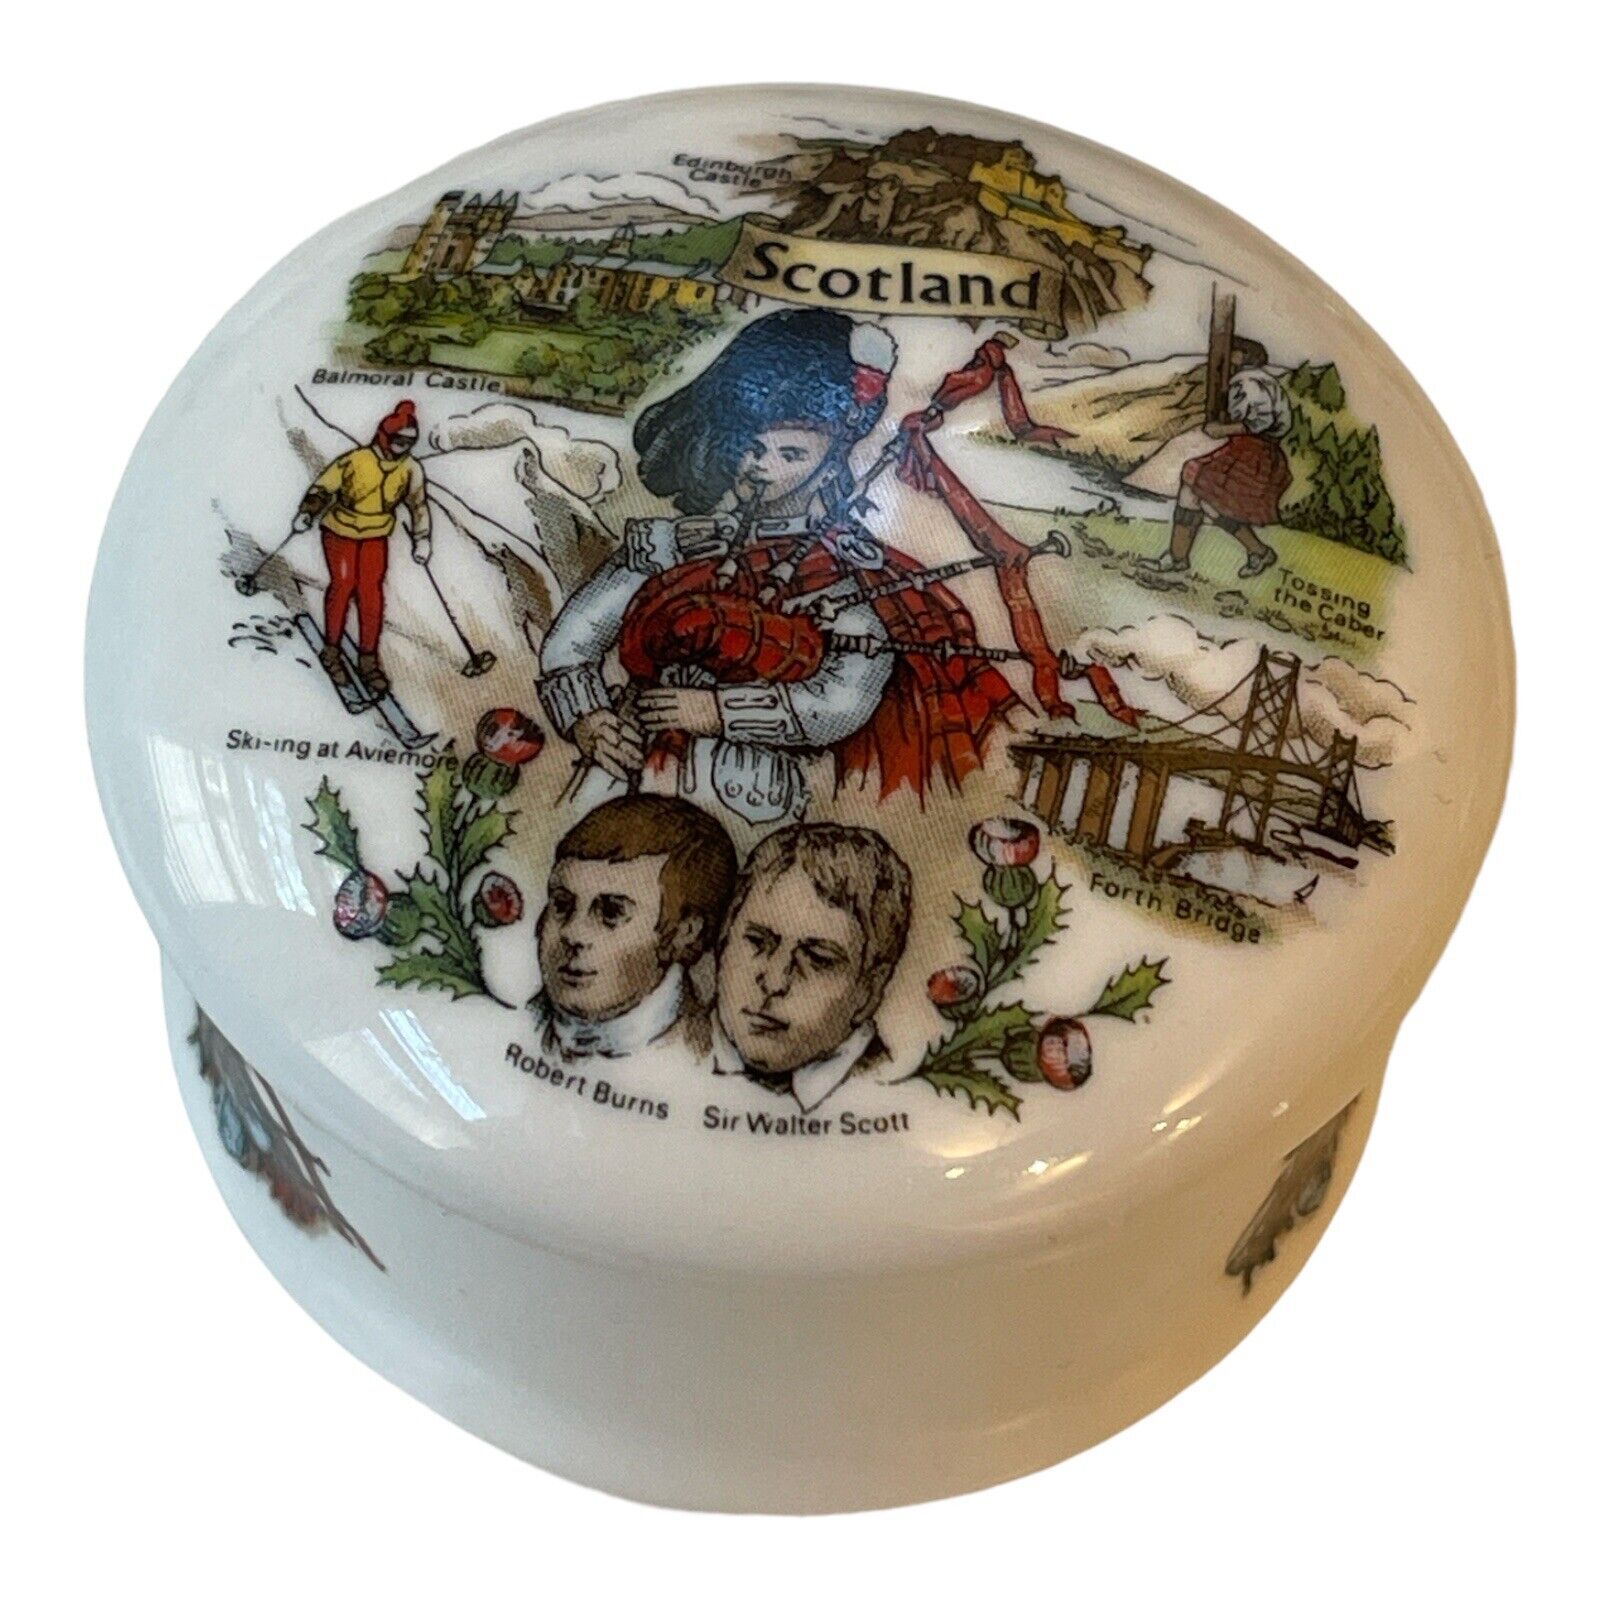 Vintage Balfour Scotland Porcelain Trinket Box China Tourist